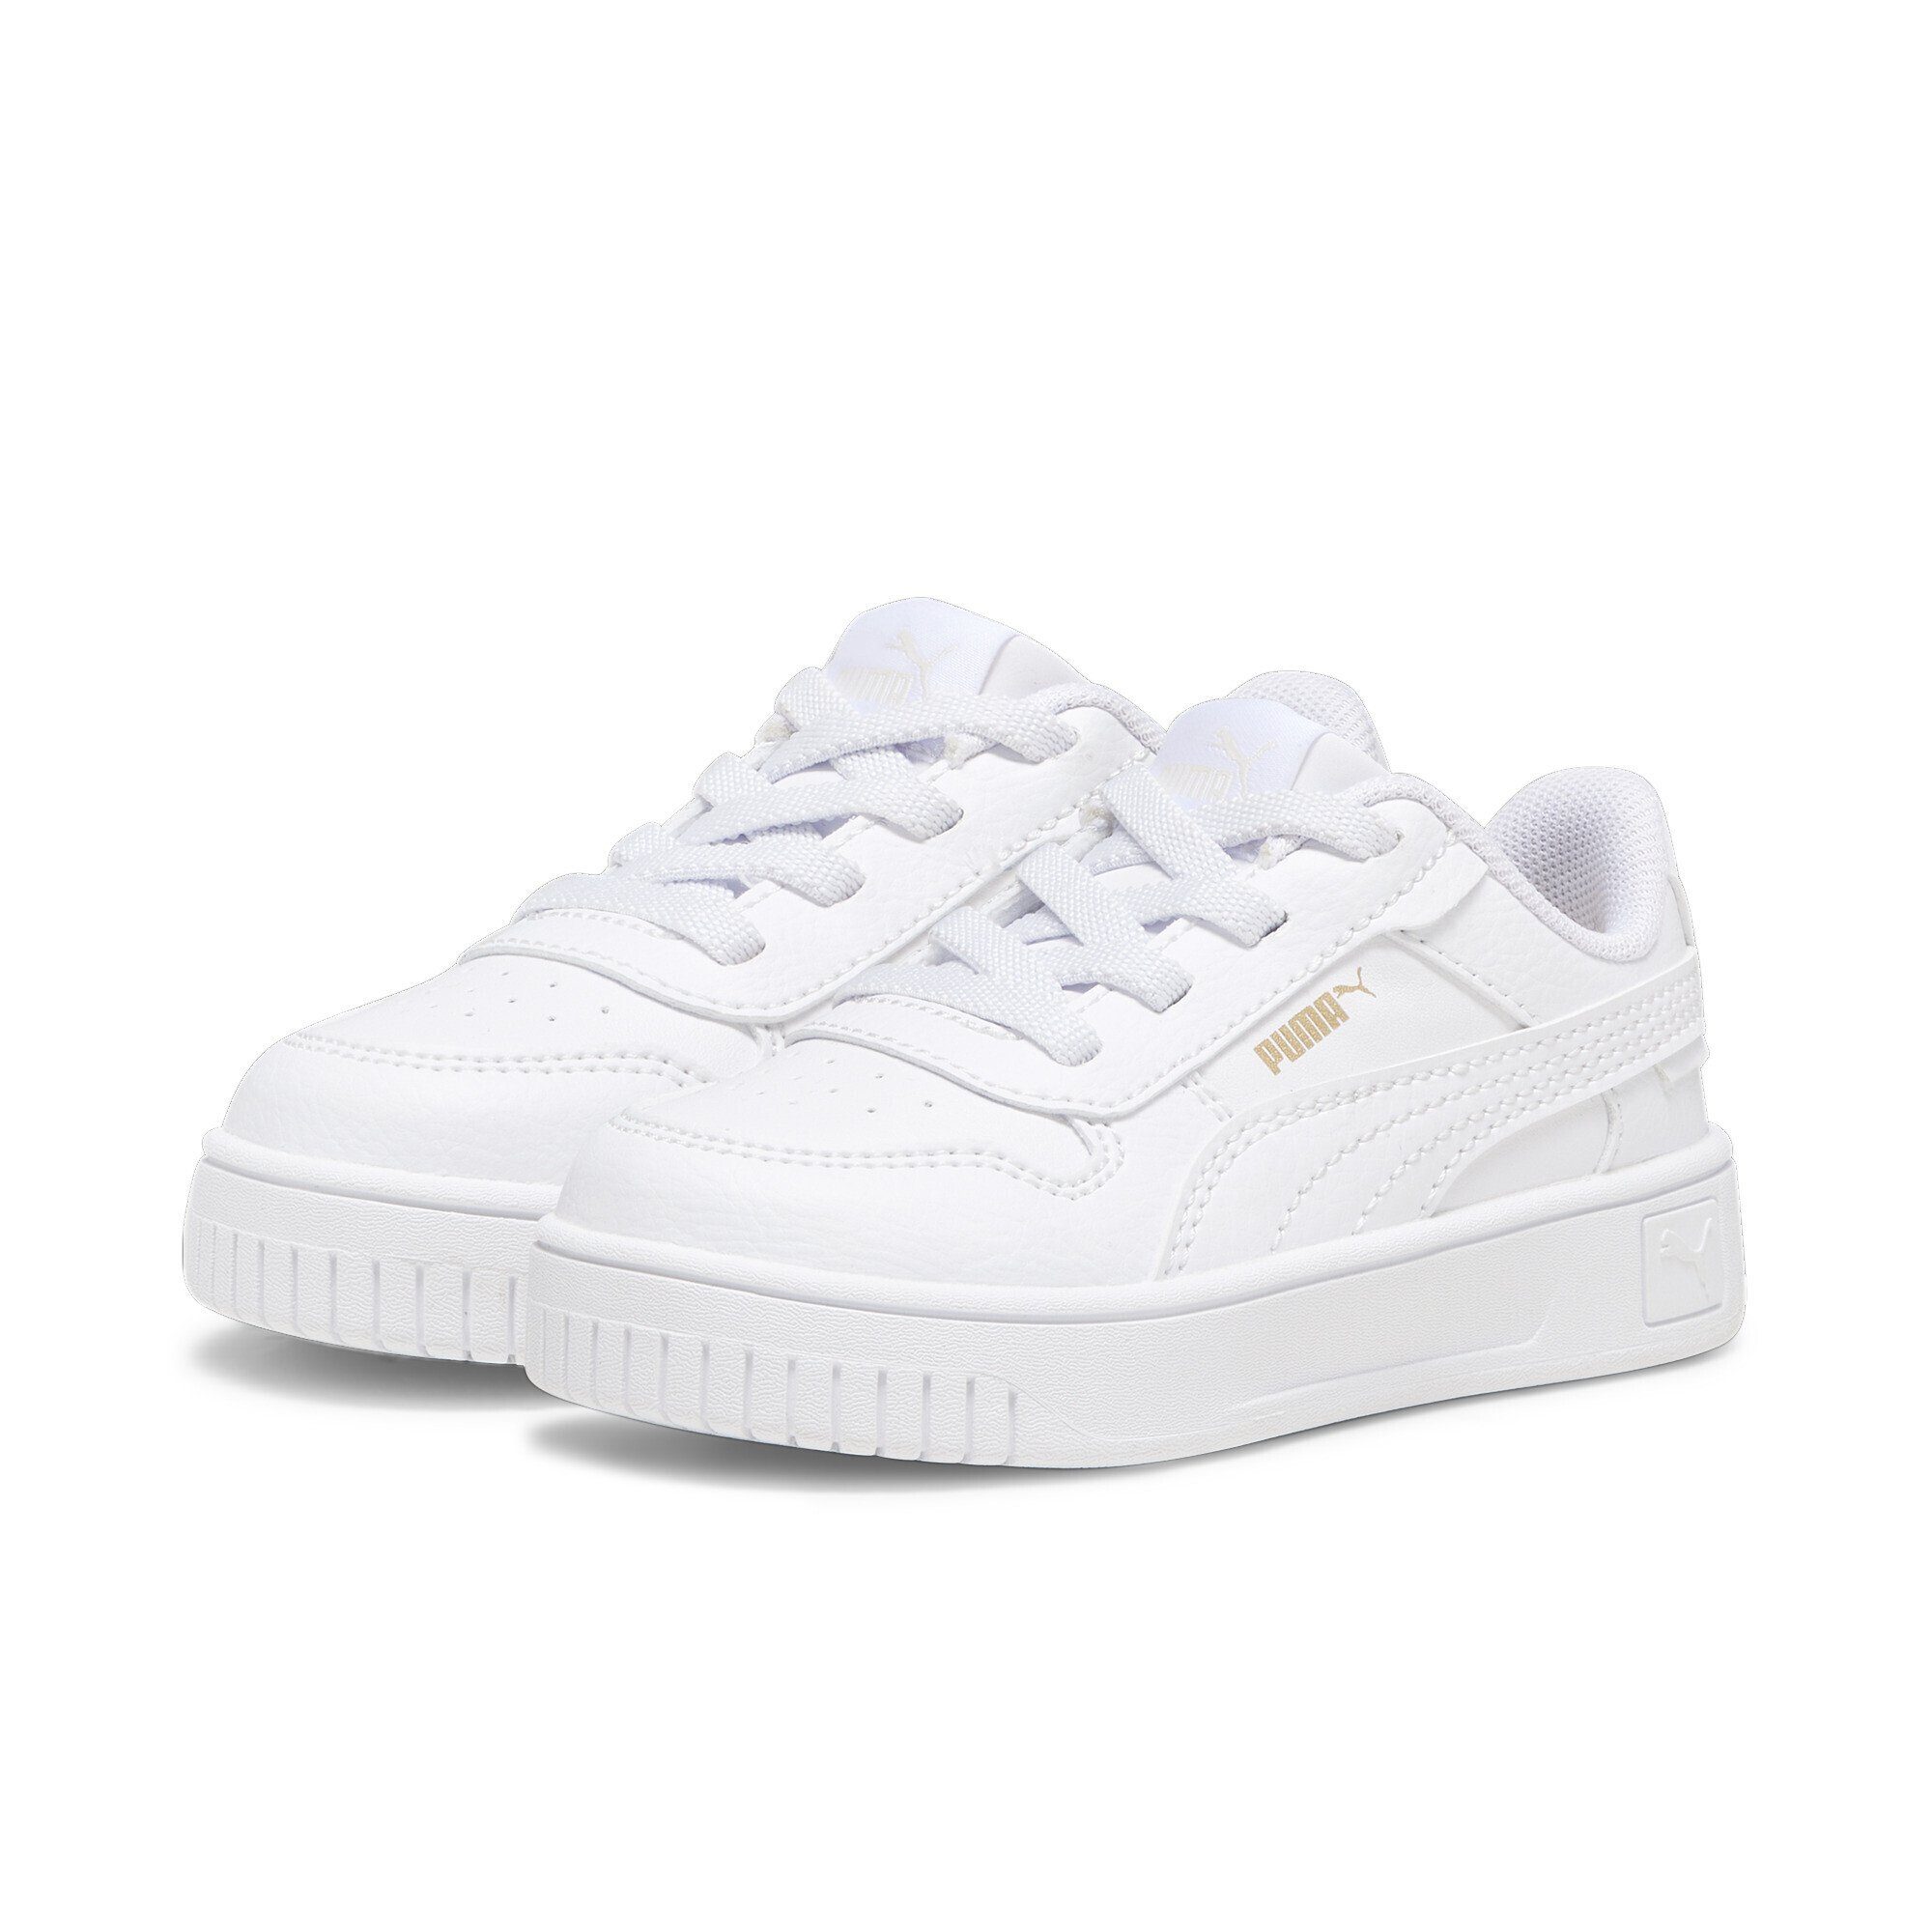 [Neuankömmling] PUMA Carina Street Sneaker Mädchen White Gold Sneakers